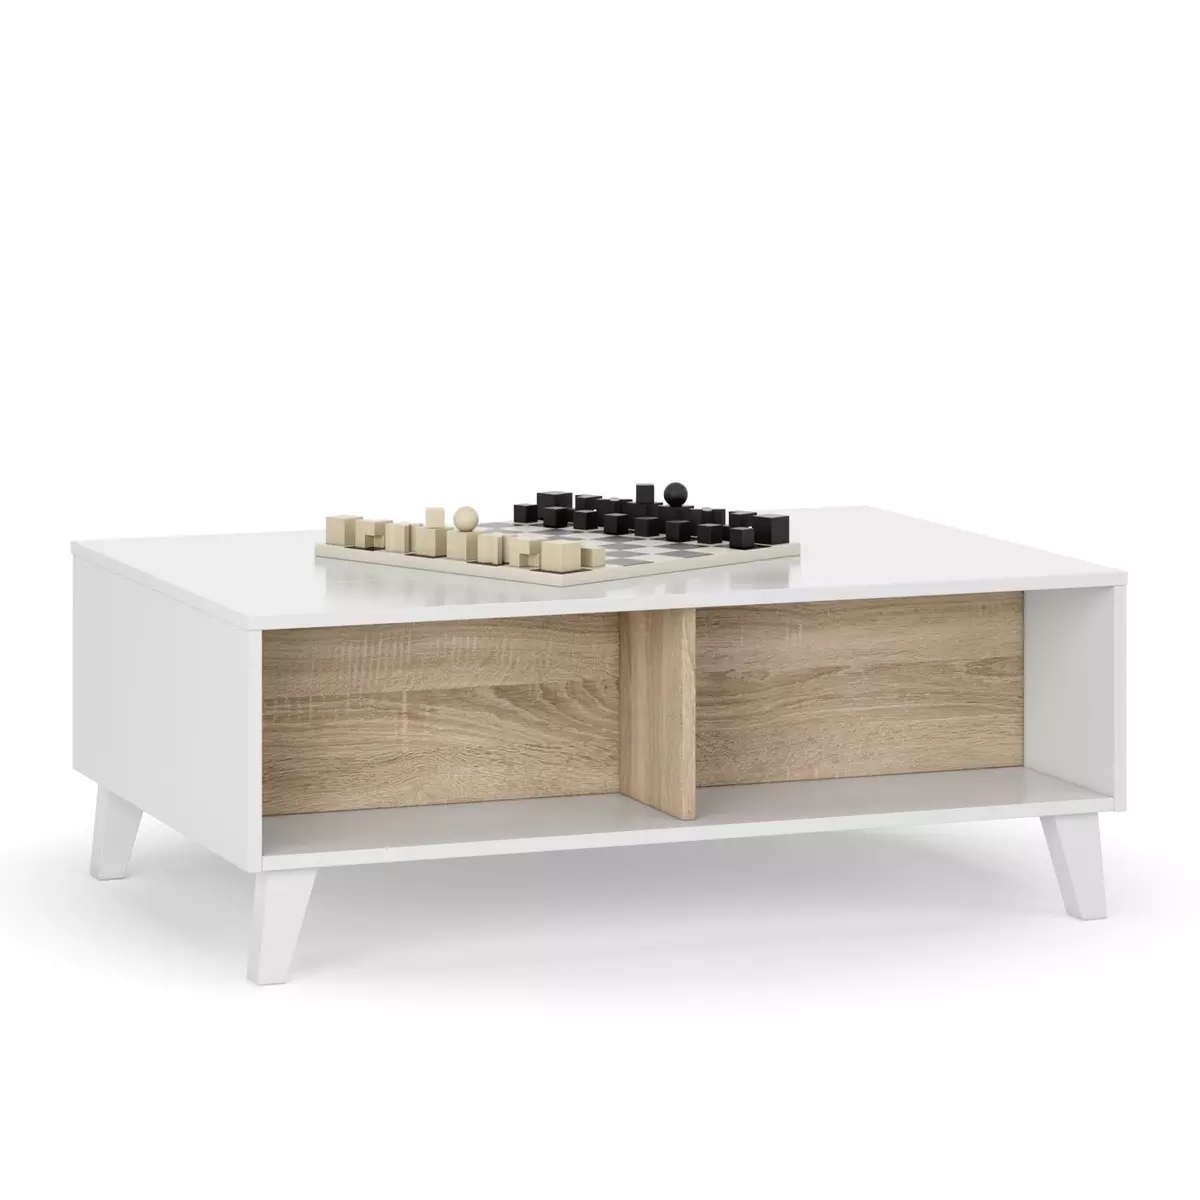 VS VENTA-STOCK Table Basse Relevable Kira Couleur Chêne/Blanc, 100 cm Largeur